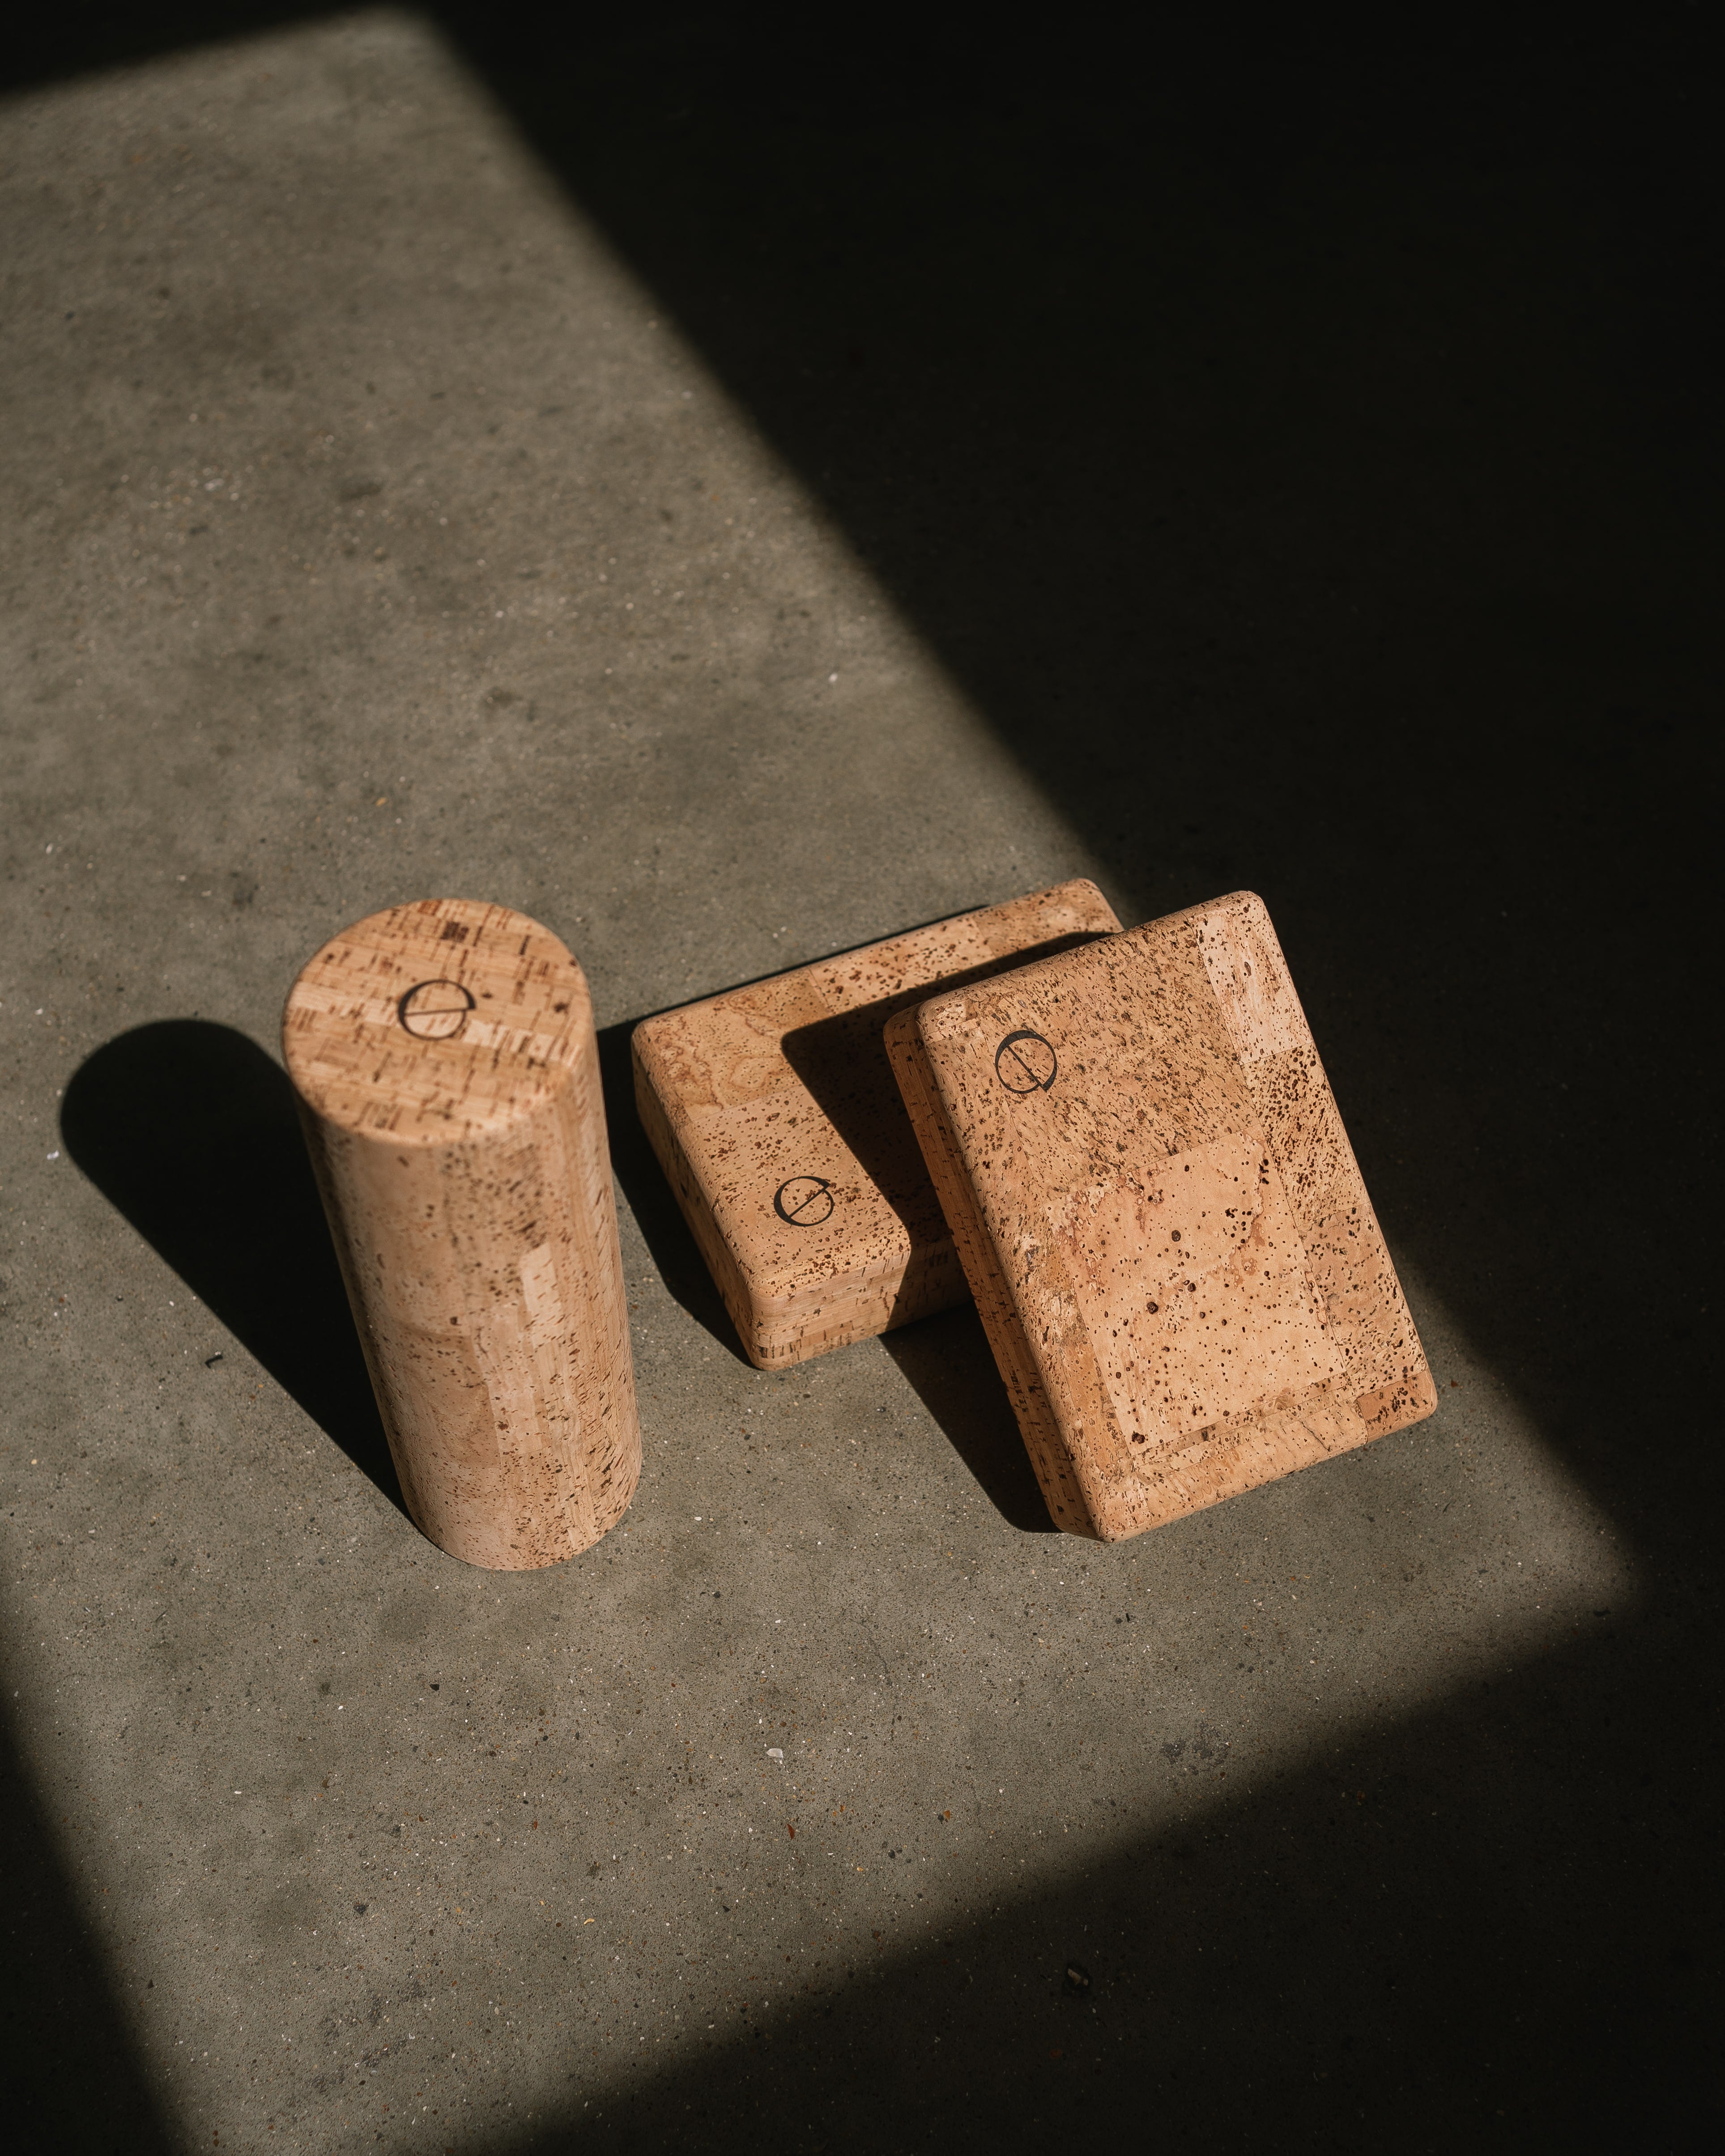 noveme cork yoga accessories placed on a concrete floor